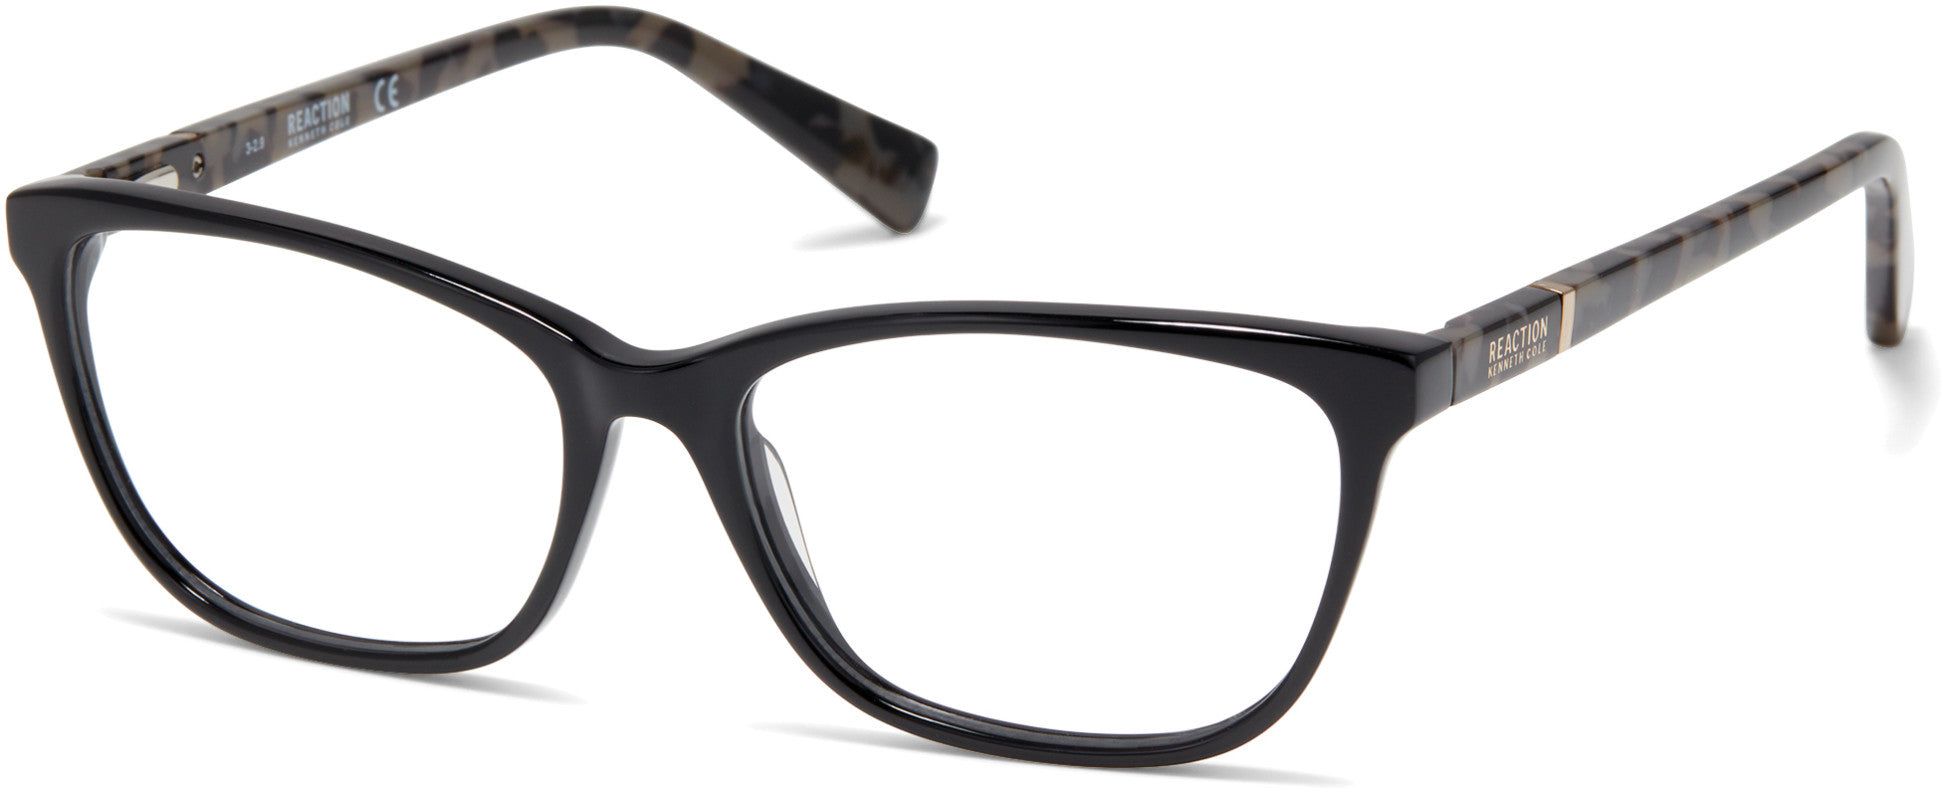 Kenneth Cole New York,Kenneth Cole Reaction KC0849 Rectangular Eyeglasses 001-001 - Shiny Black